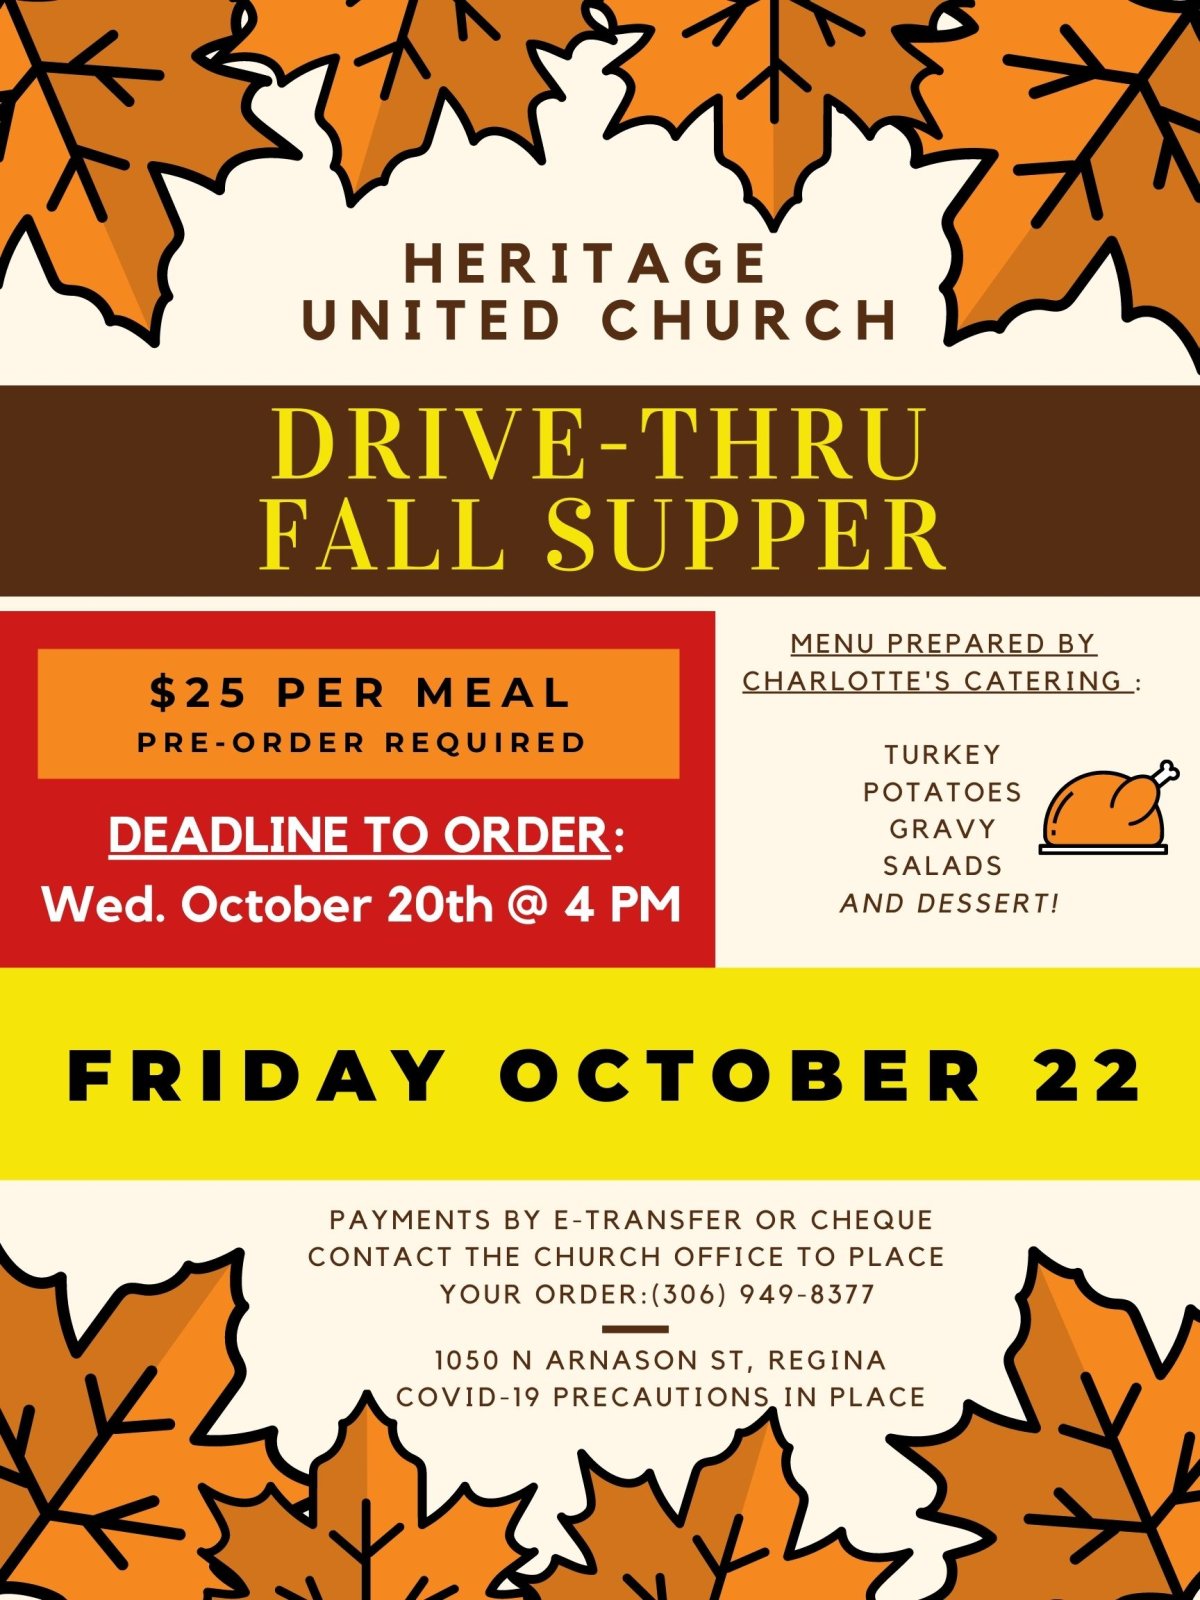 Heritage United Church Drive-Thru Fall Supper - image